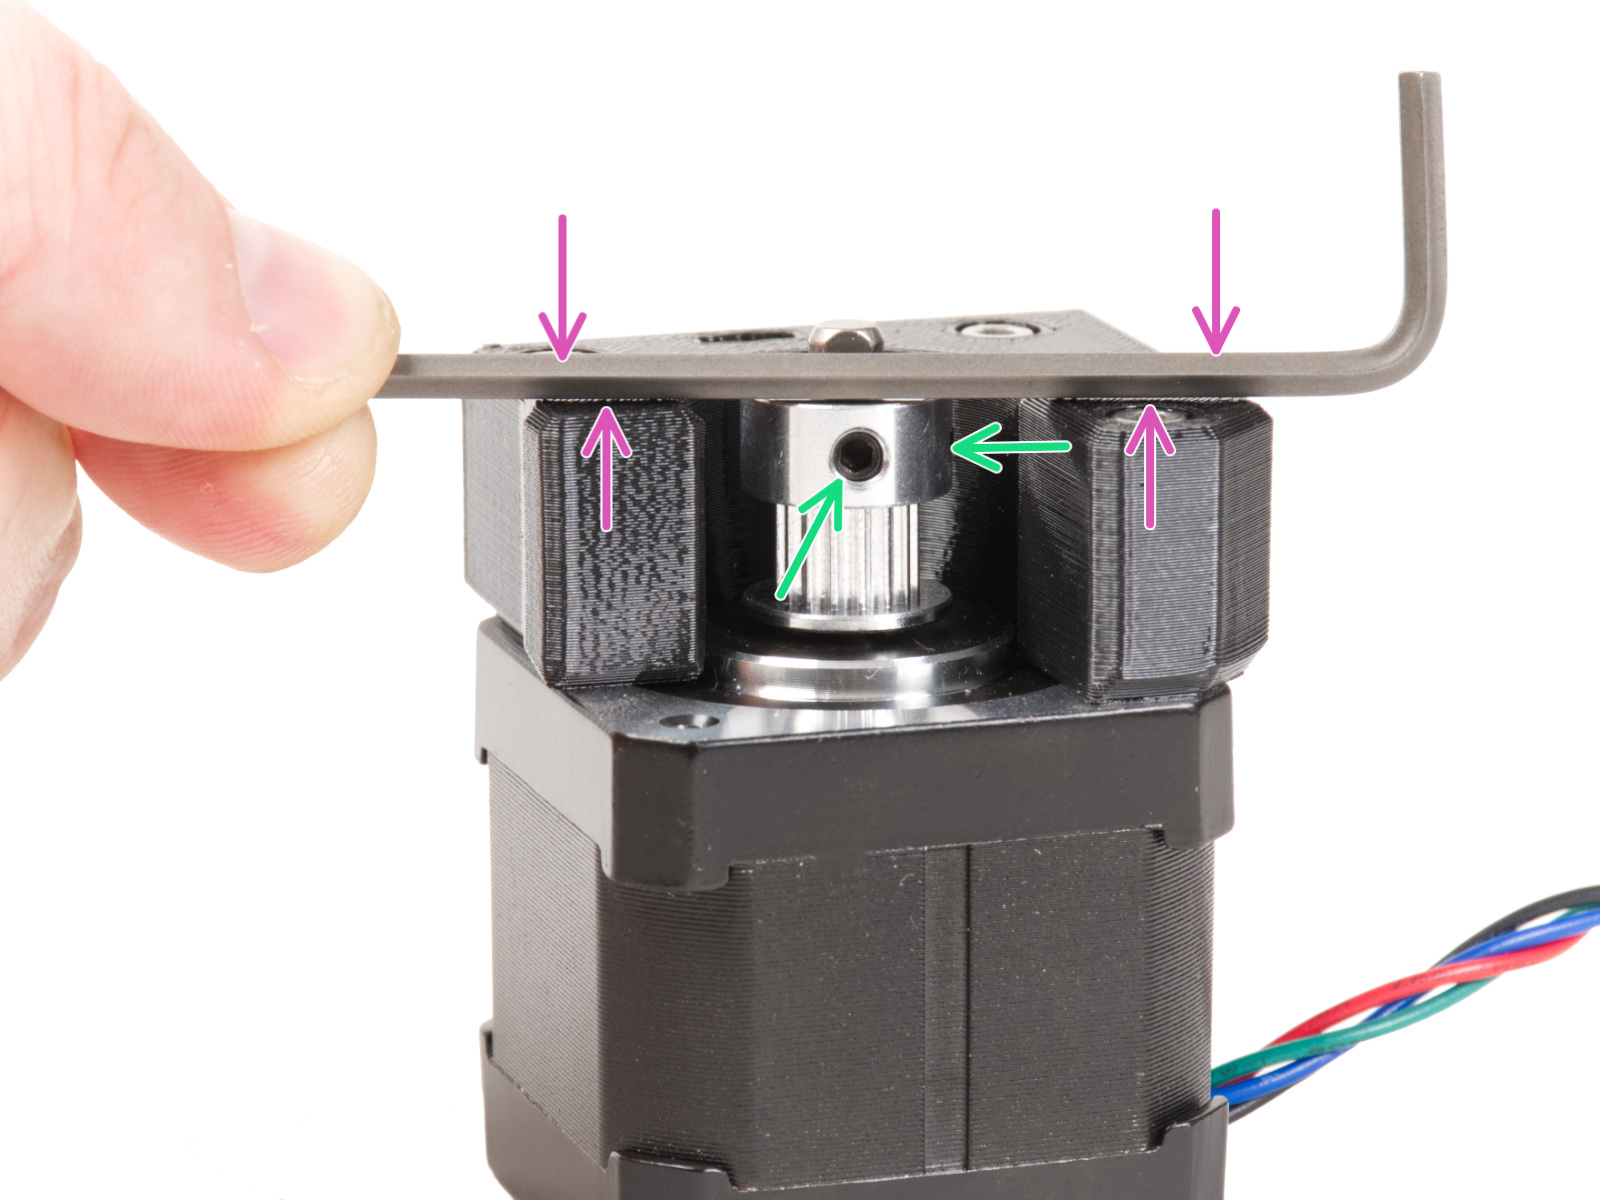 Adjusting the Y-motor pulley